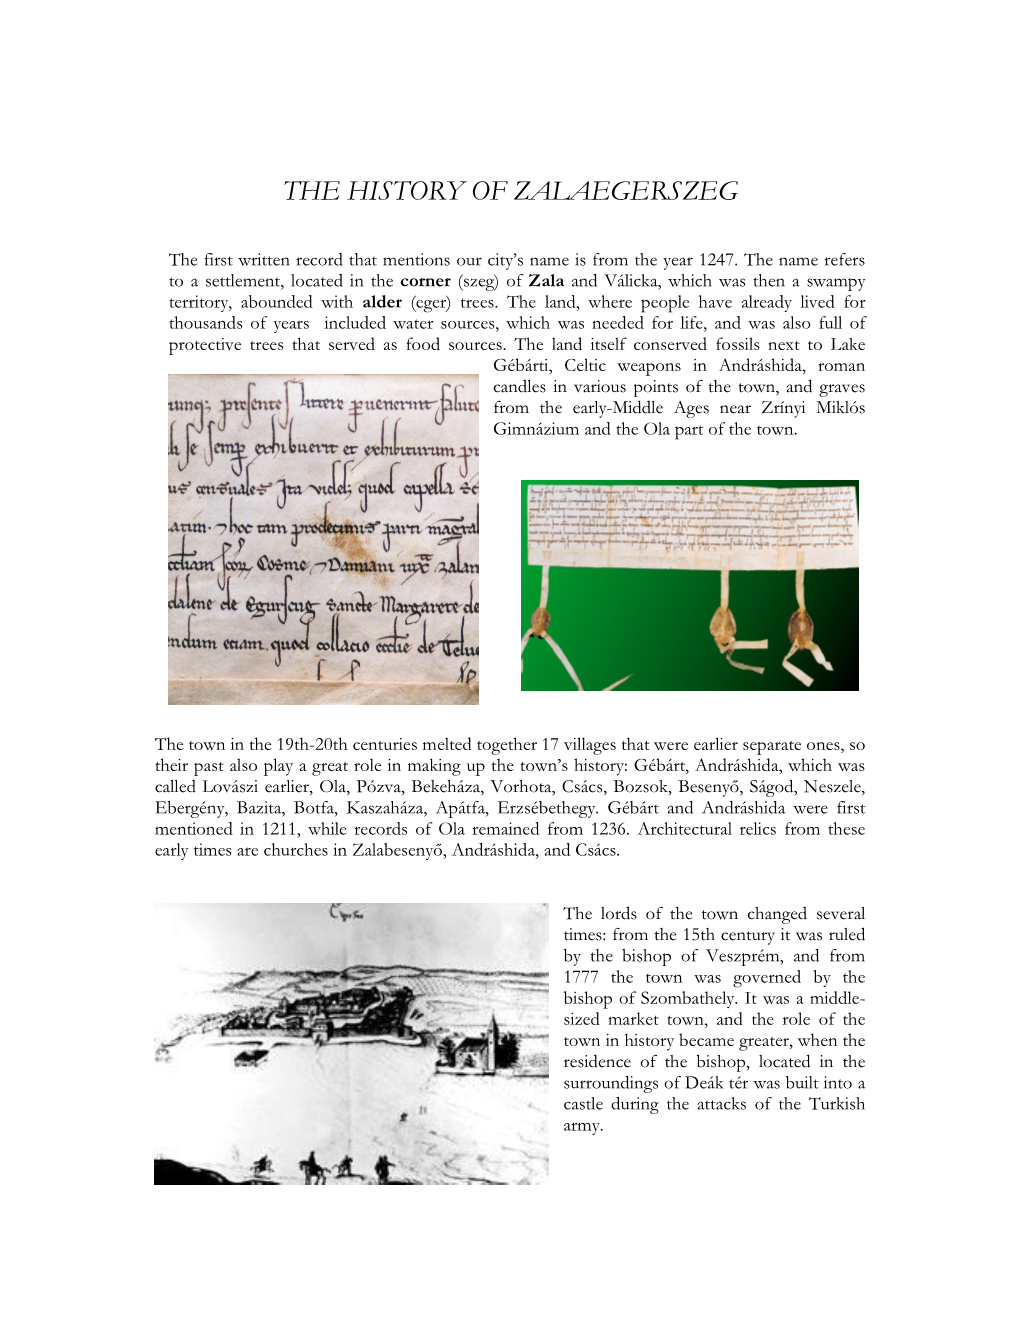 The History of Zalaegerszeg